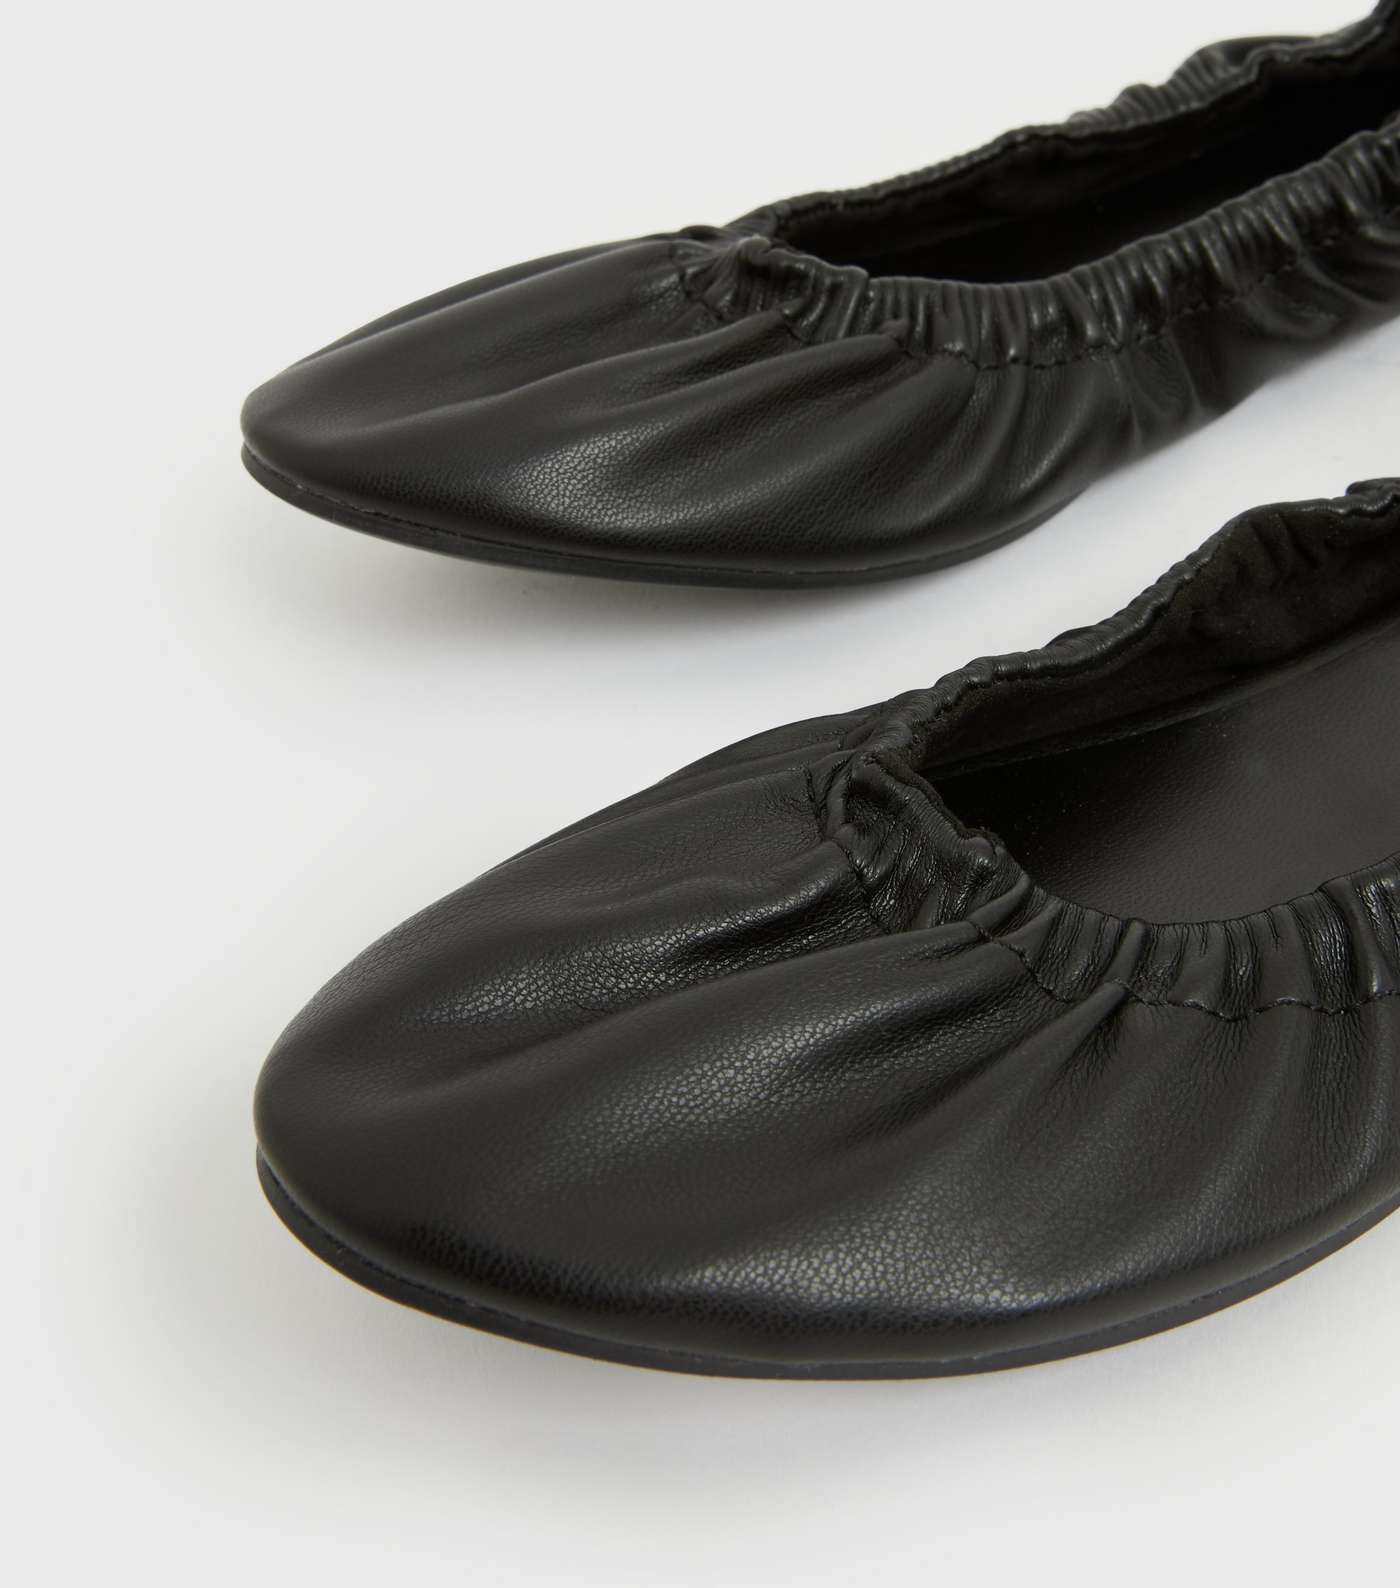 Black Leather-Look Ruched Ballet Pumps Image 4